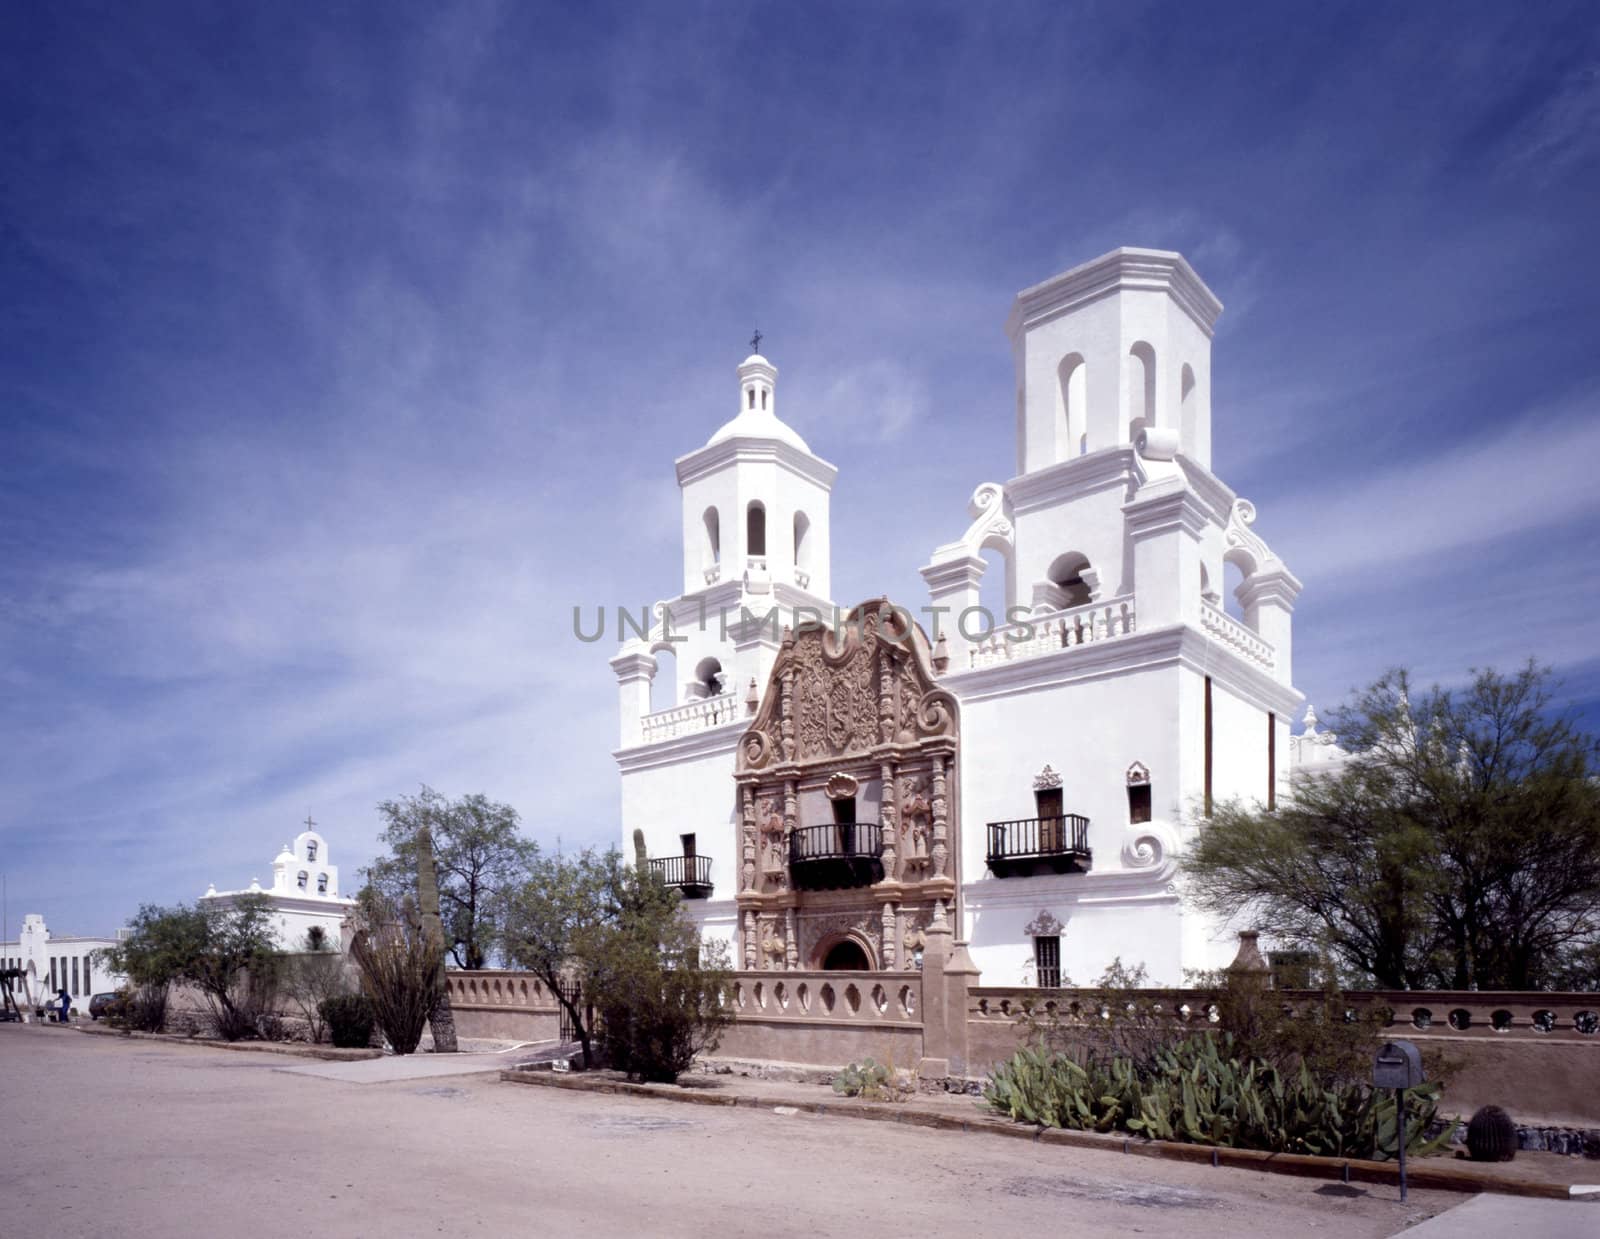 Mission San Xavier in Tucson, Arizona by jol66